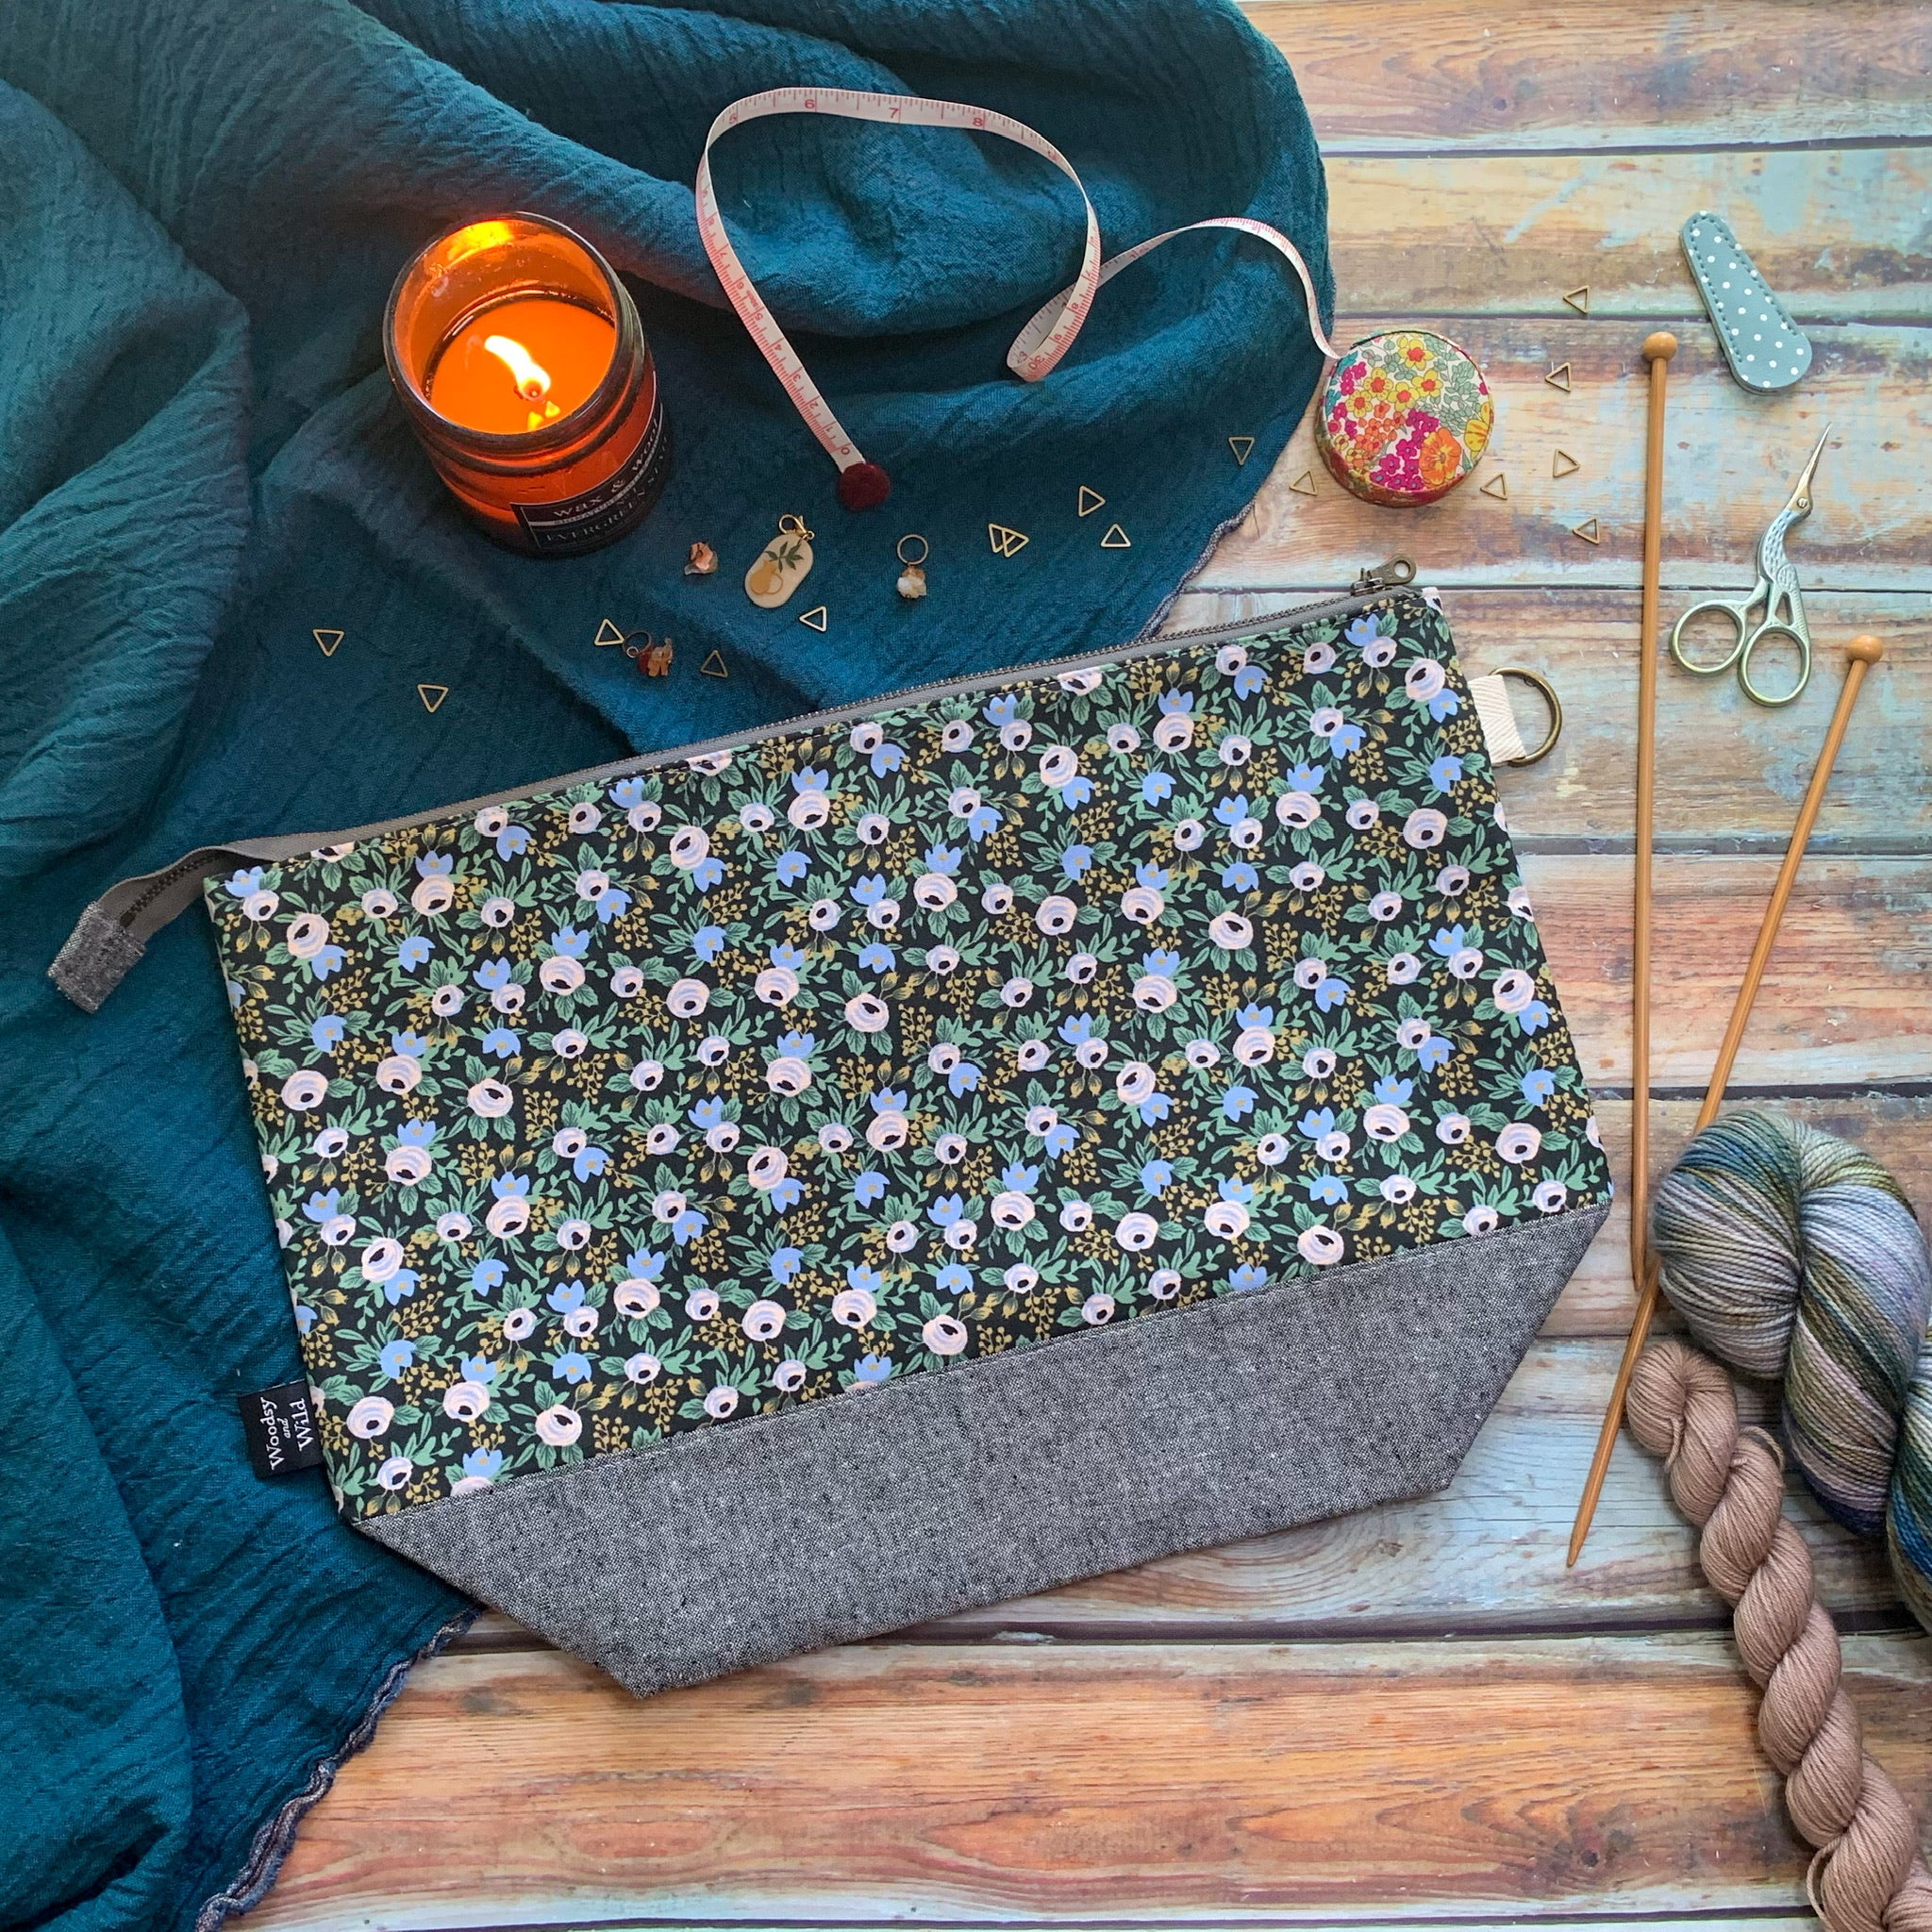 Twinkle • Knitting Tote Bag - Shop HeLo store Handbags & Totes - Pinkoi